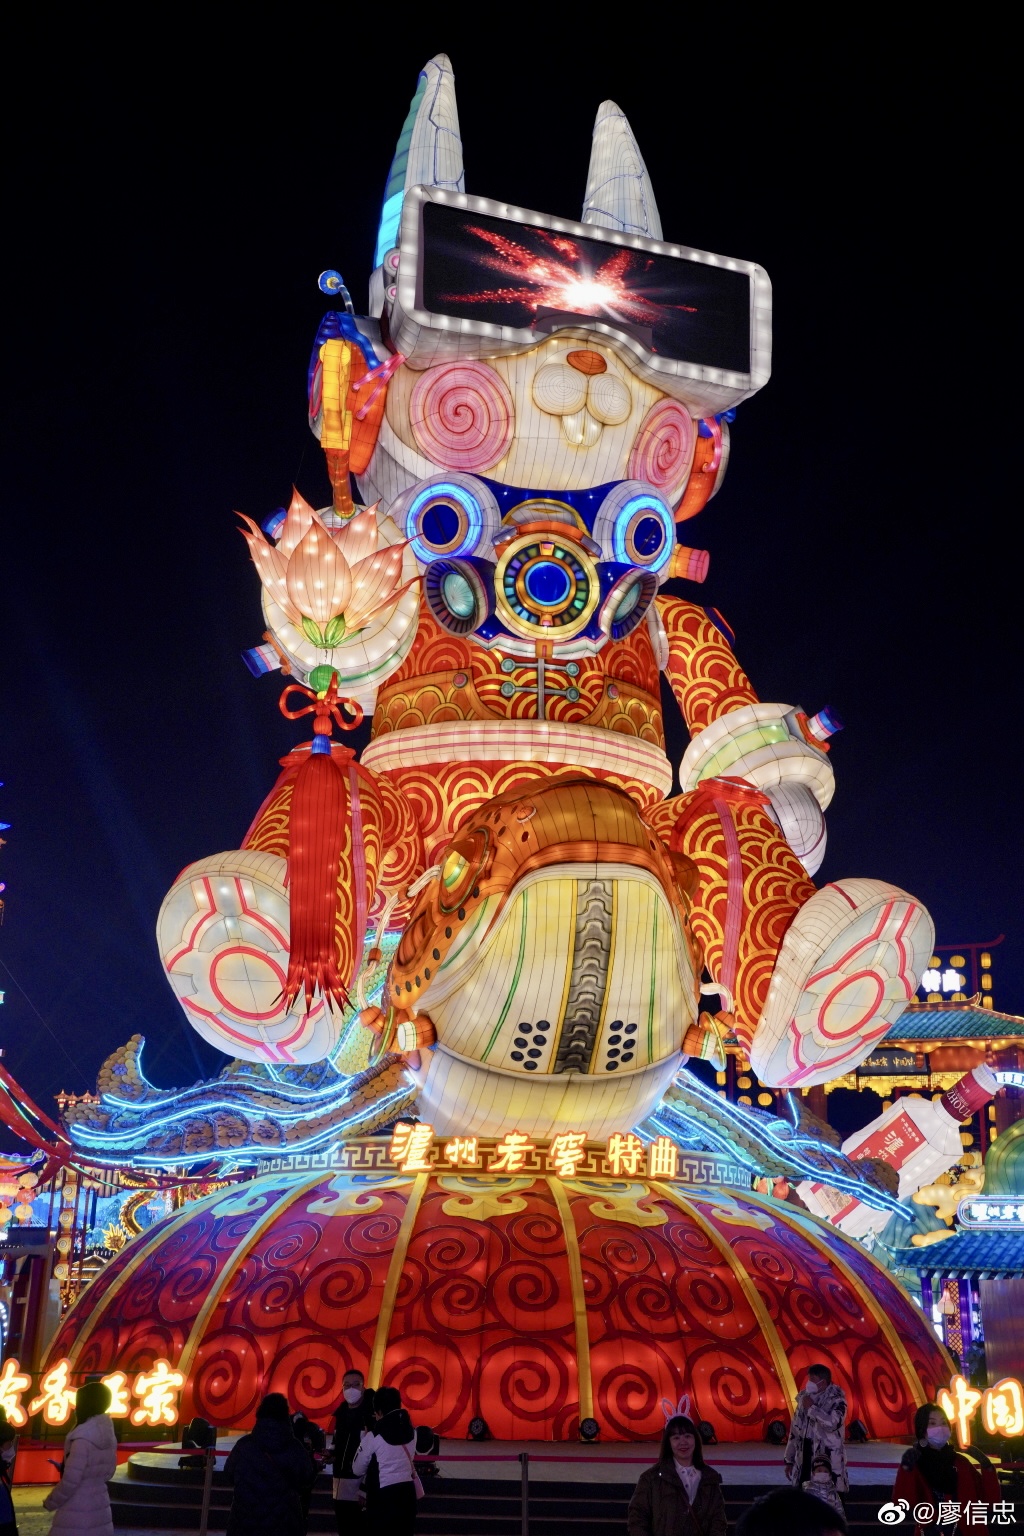 Cyberpunk rabbit at the Zigong Lunar New Year festival in China